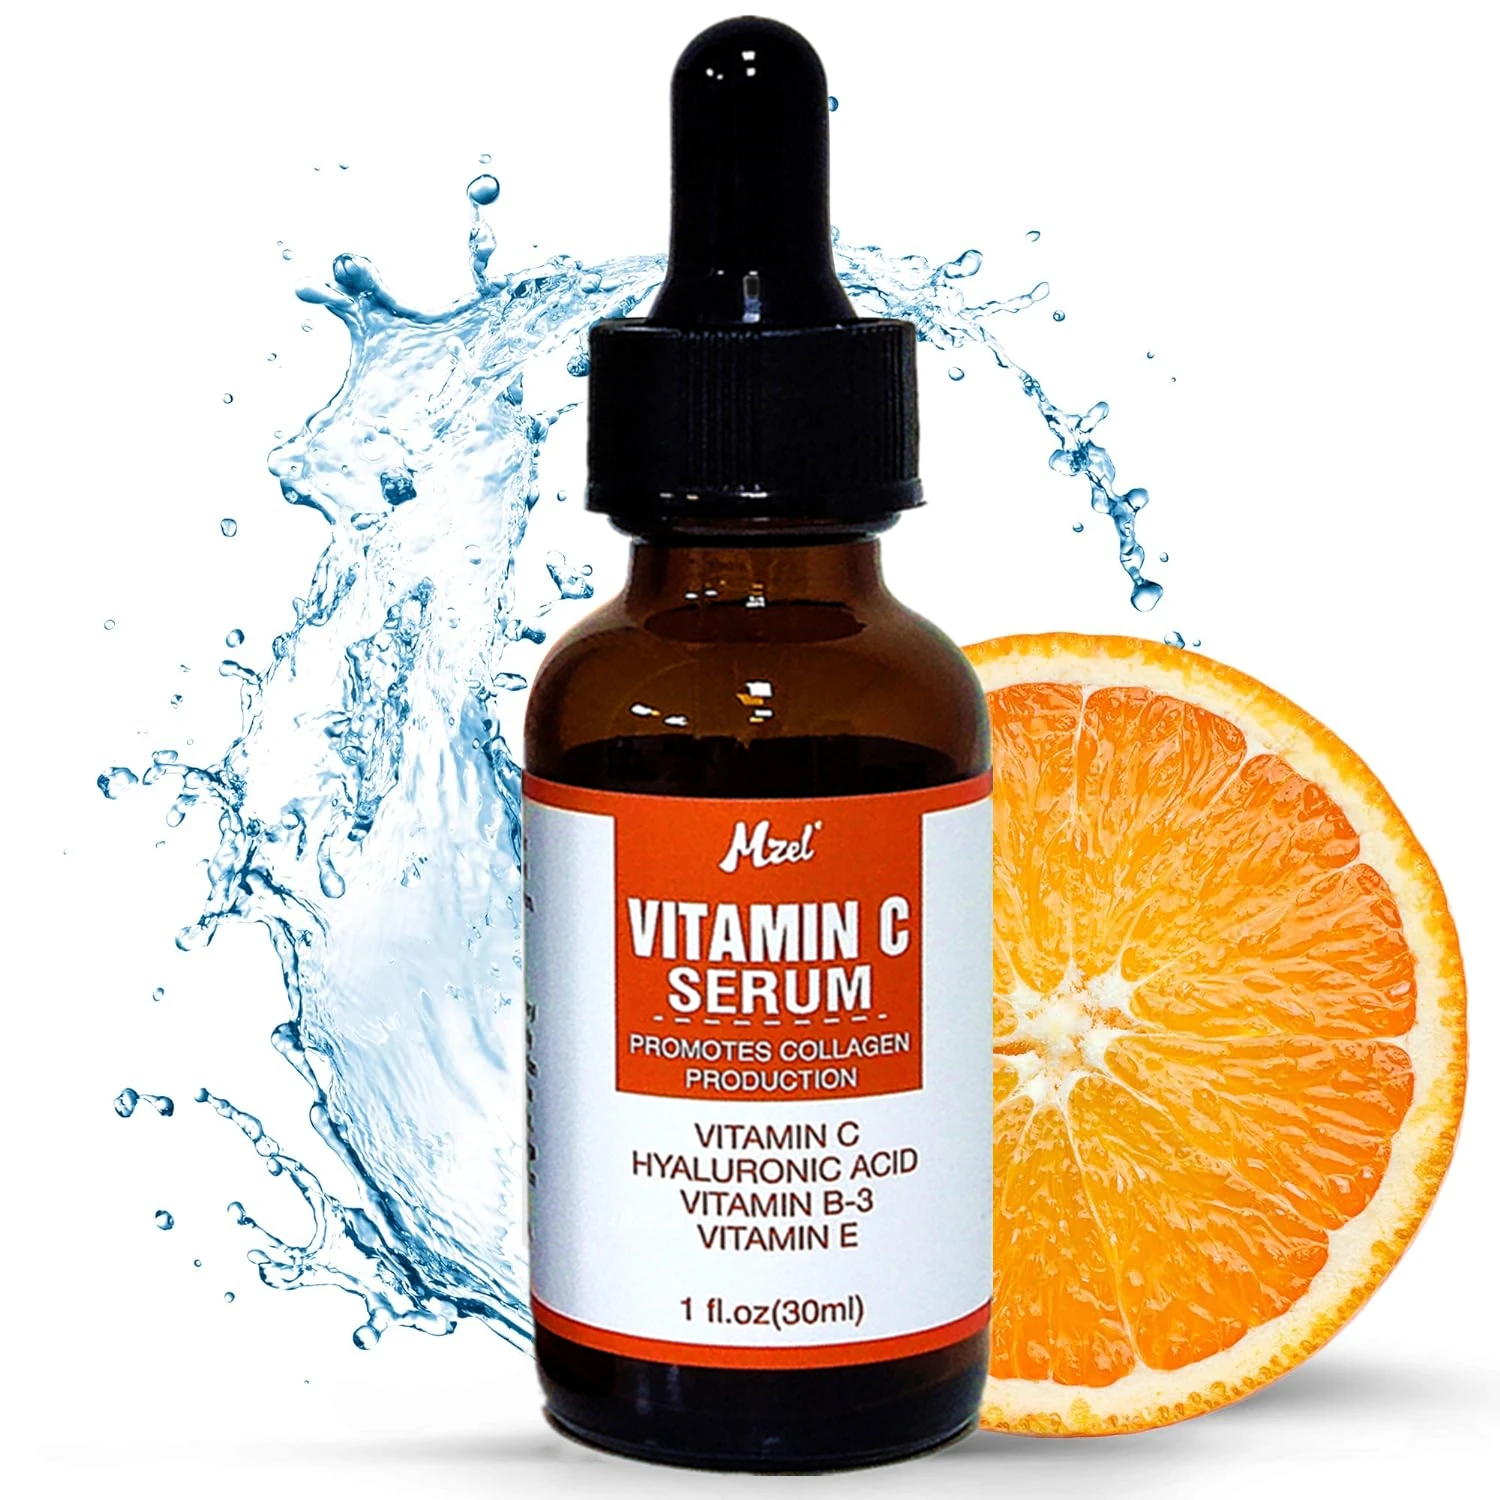 

Organic Vitamin C Face Serum 20% Anti Aging Facial Serum for Black Skin - Reduce Dark Spots Acne & Wrinkles Brightening Skin